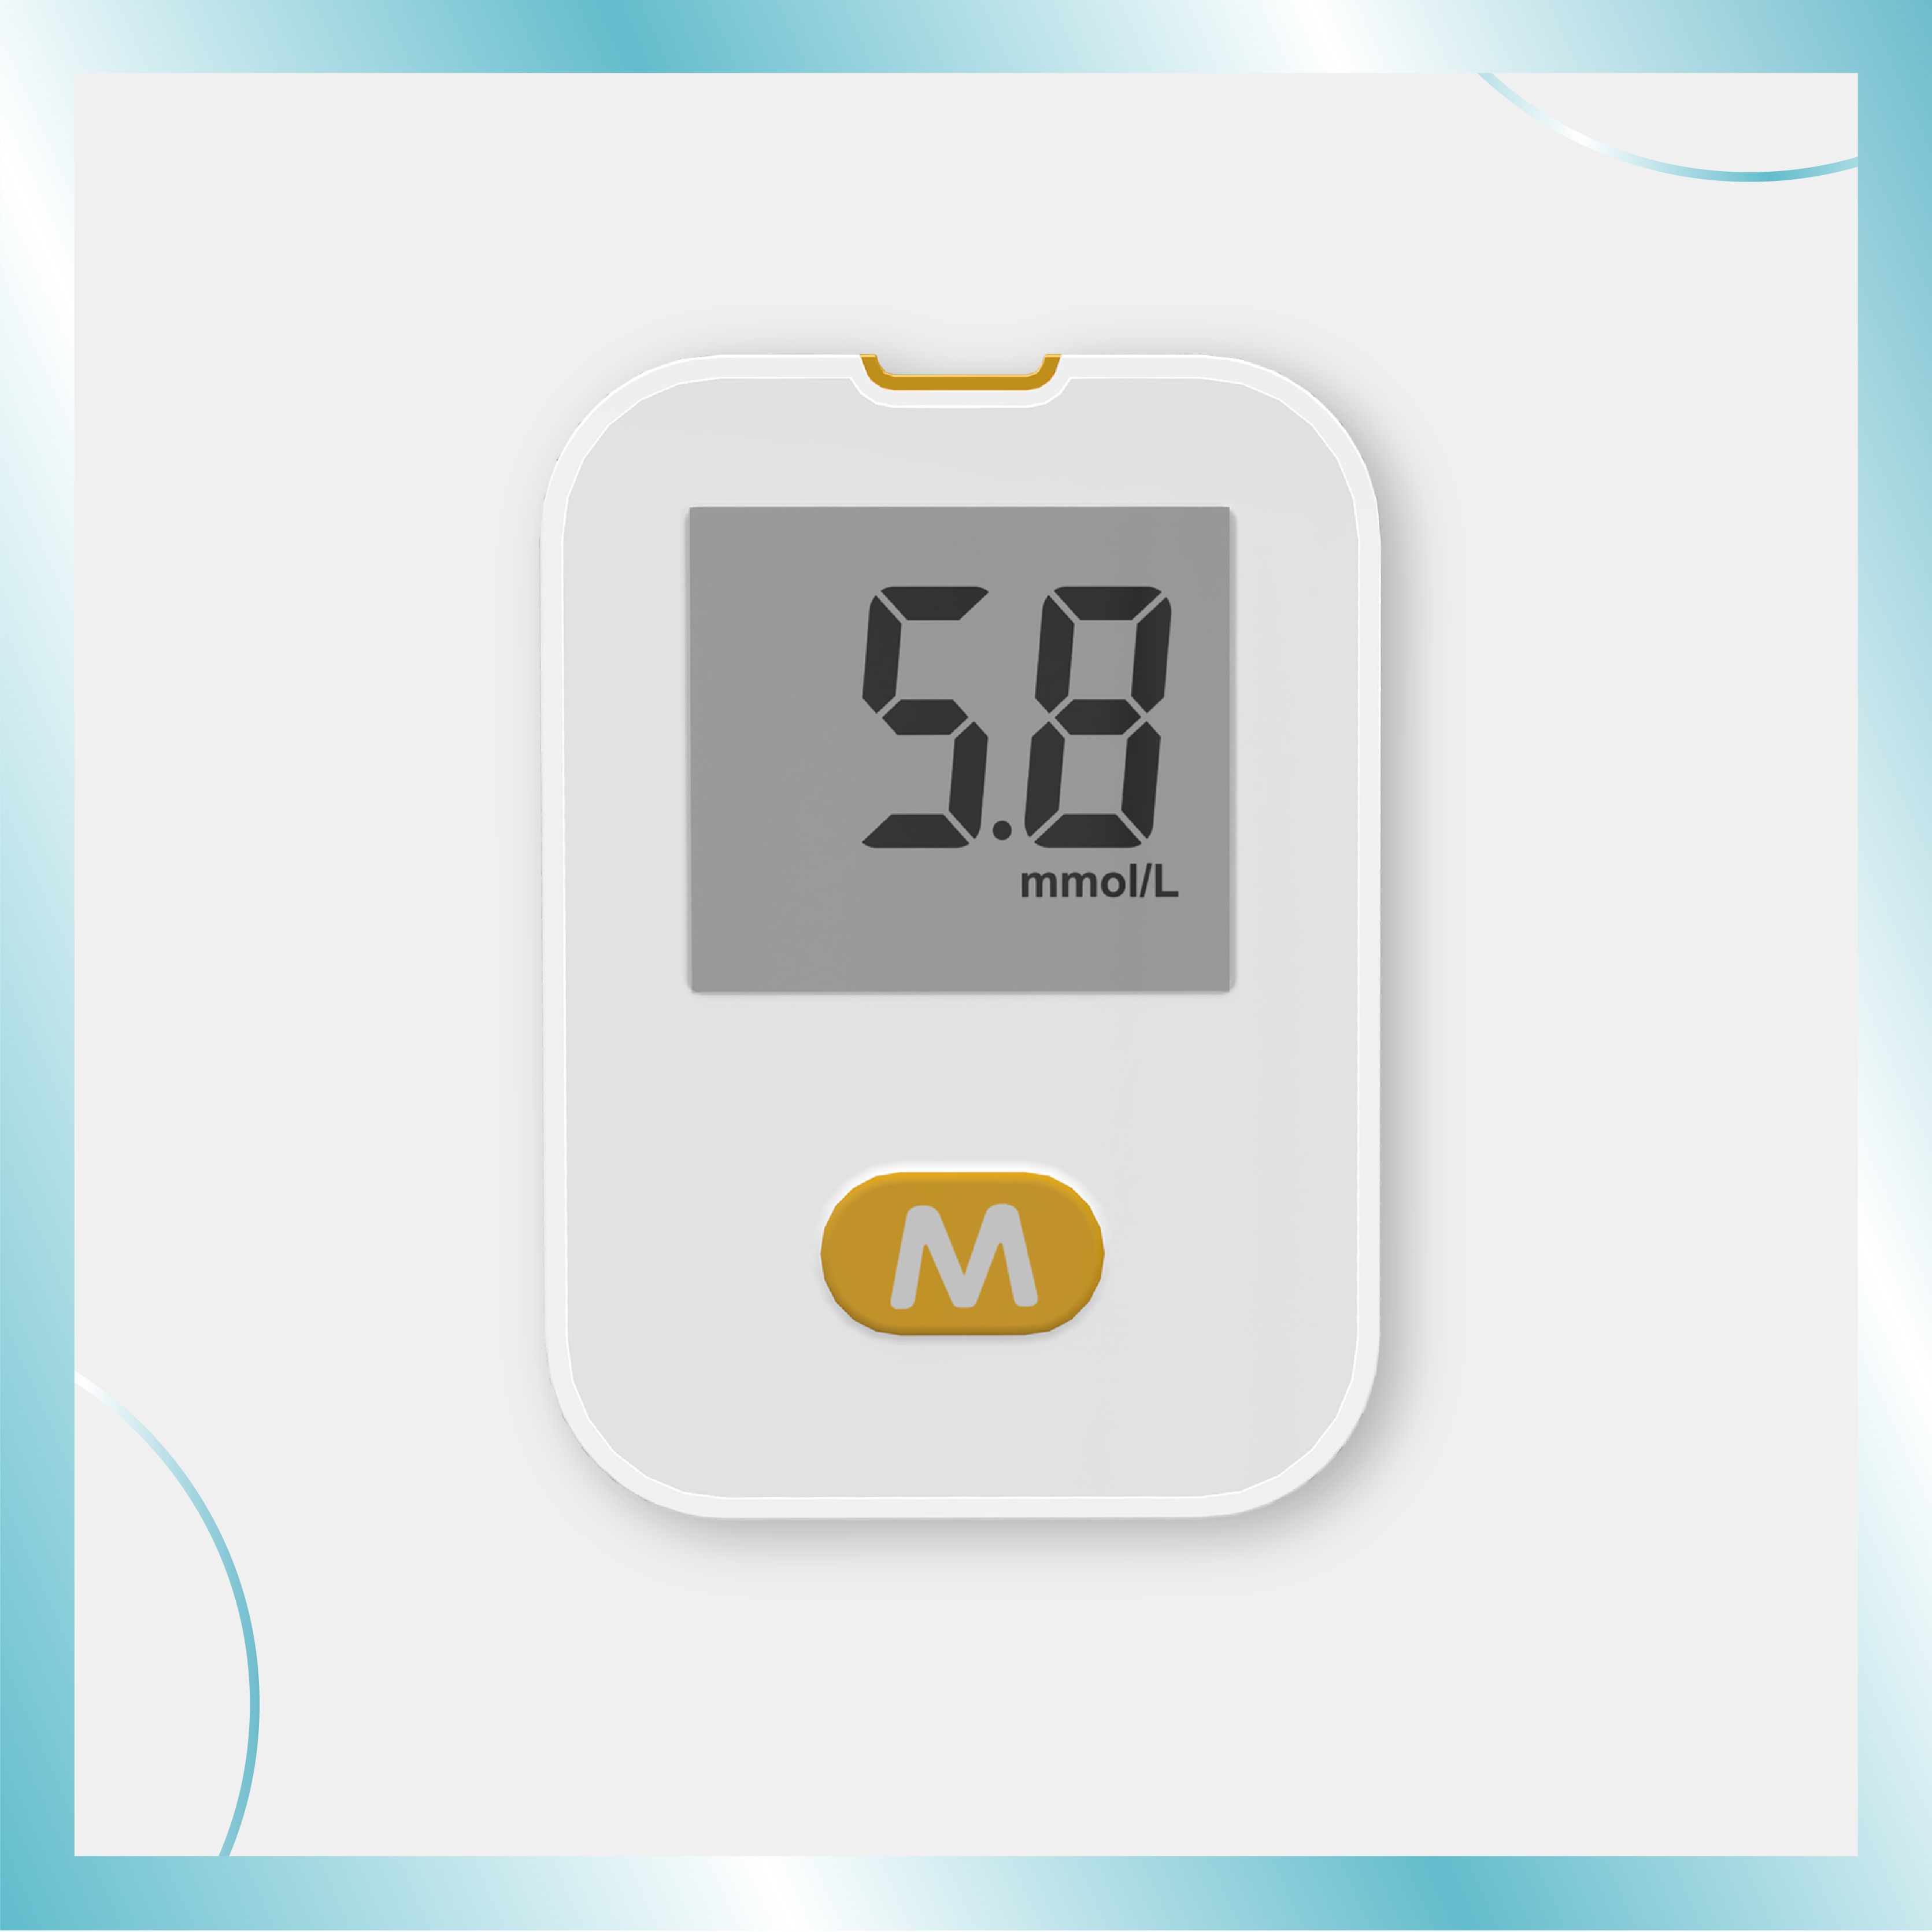 Blood Glucose Meter BG-519